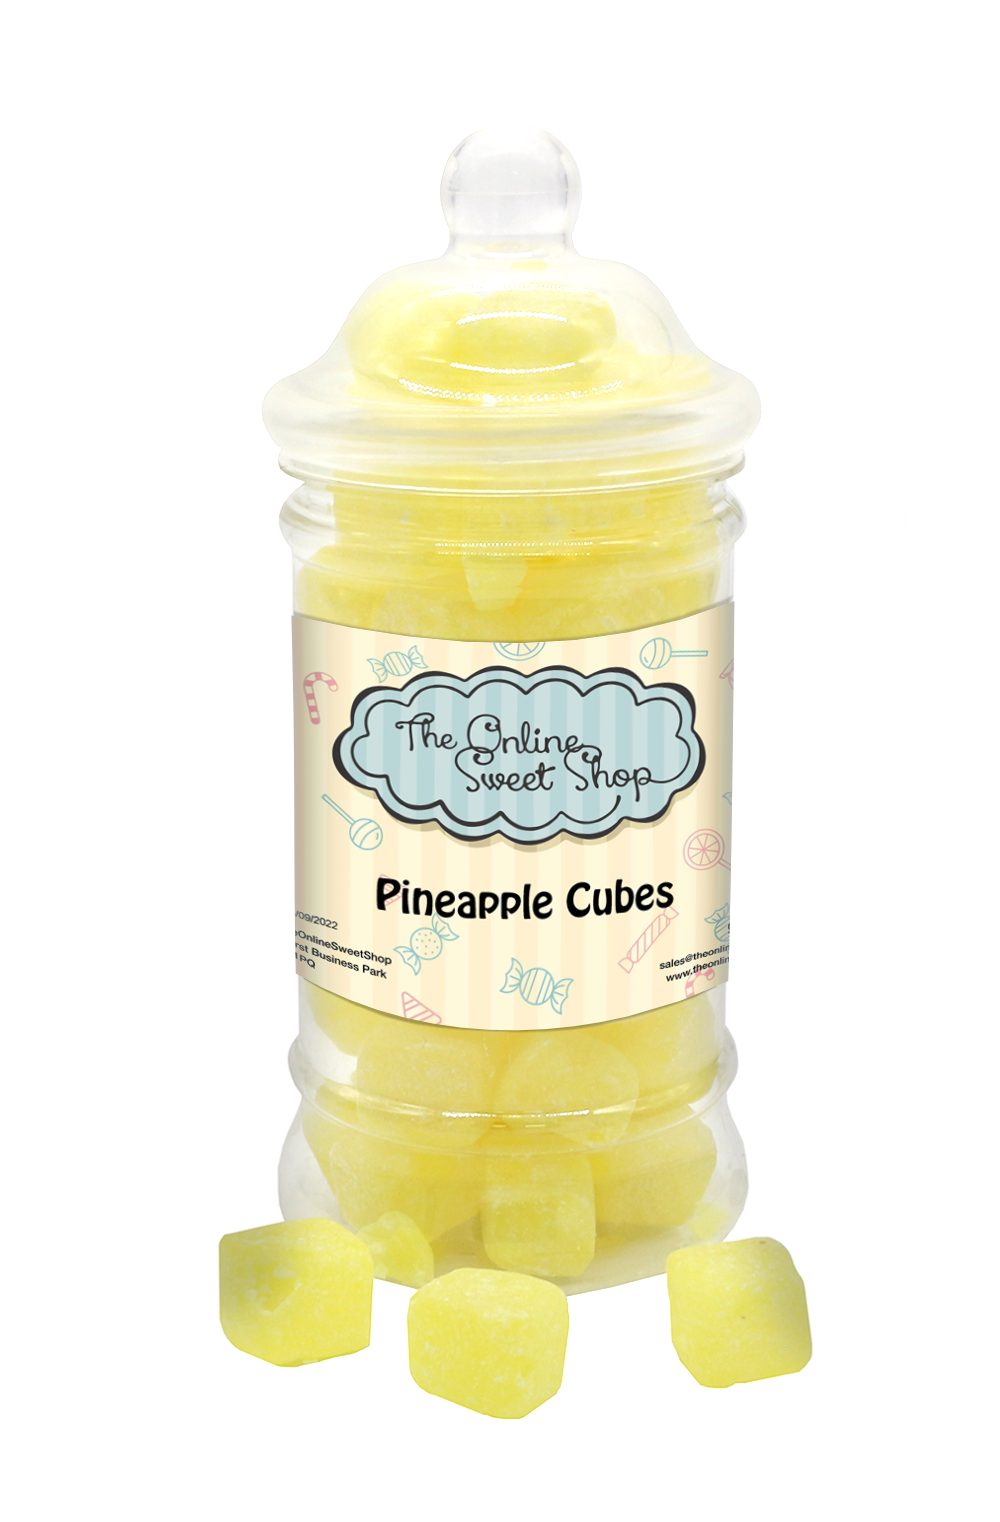 Pineapple Cubes Sweets Jar